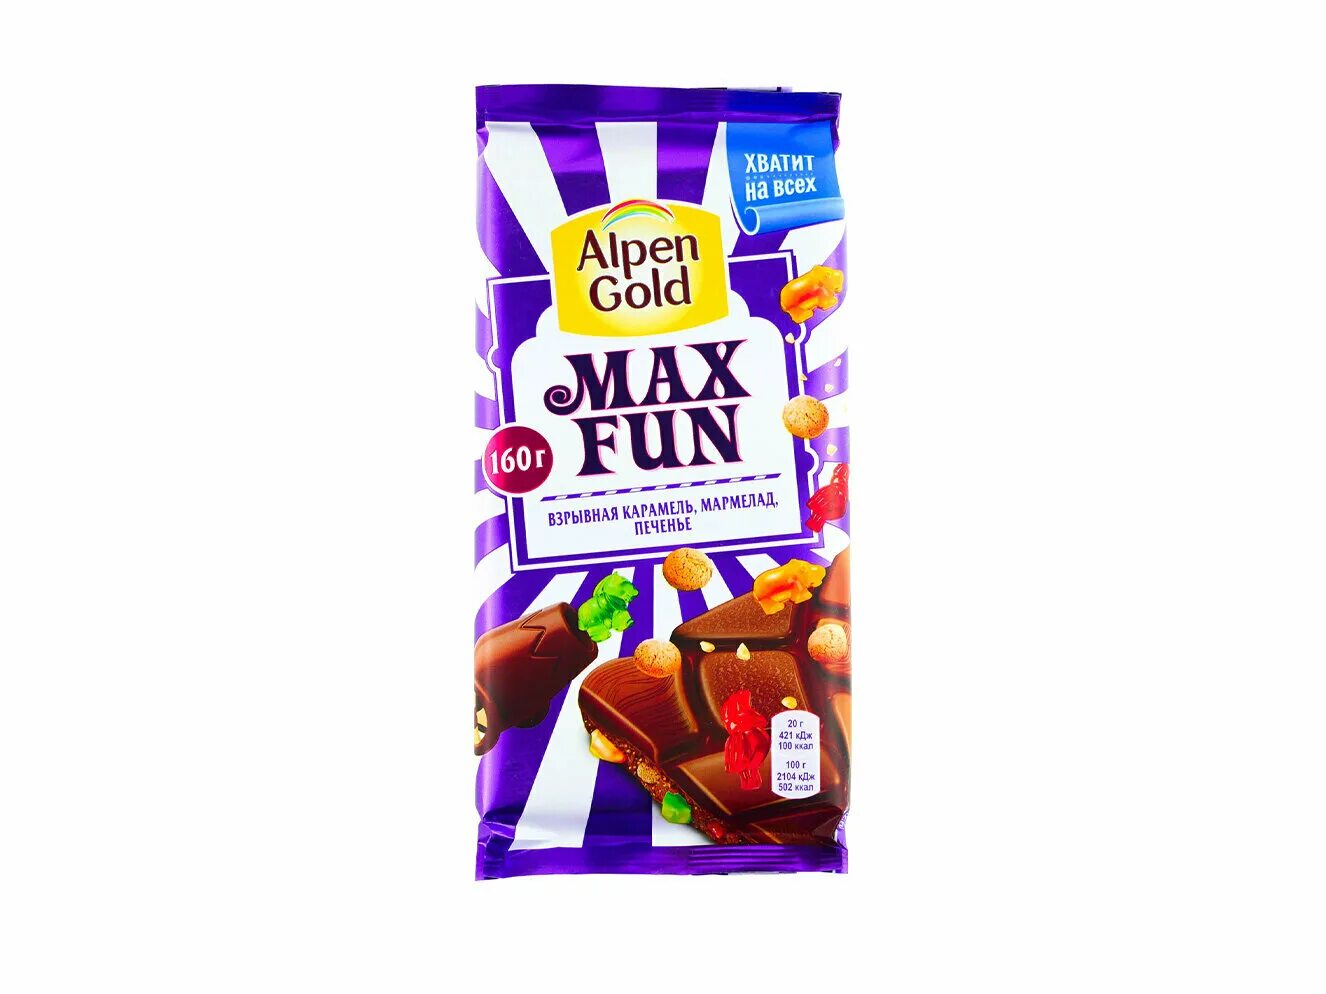 Fun mix. Шоколад Альпен Голд Max fun, взрывная карамель, 160 г. Alpen Gold Max Fan 150гр. Max Fan шоколадка. Альпен Гольд с карамелью.